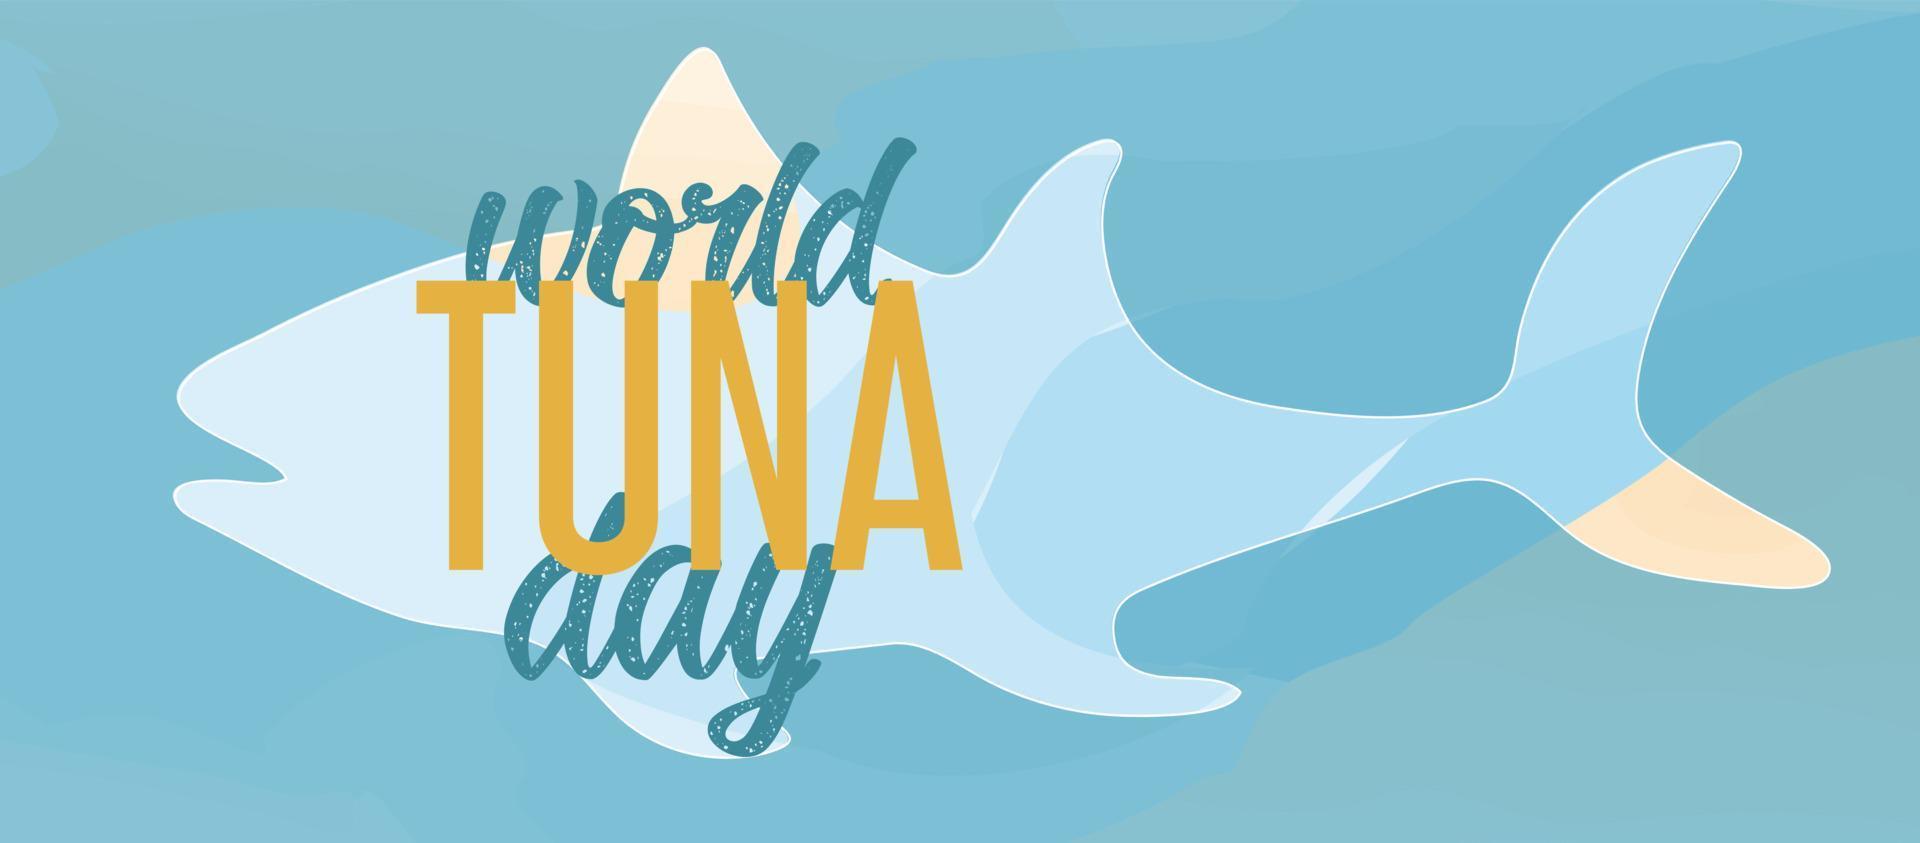 ilustración vectorial día mundial del atún 2 de mayo. fondo, pancarta, tarjeta, póster con letras de texto. silueta de pescado. en colores azul marino. vector